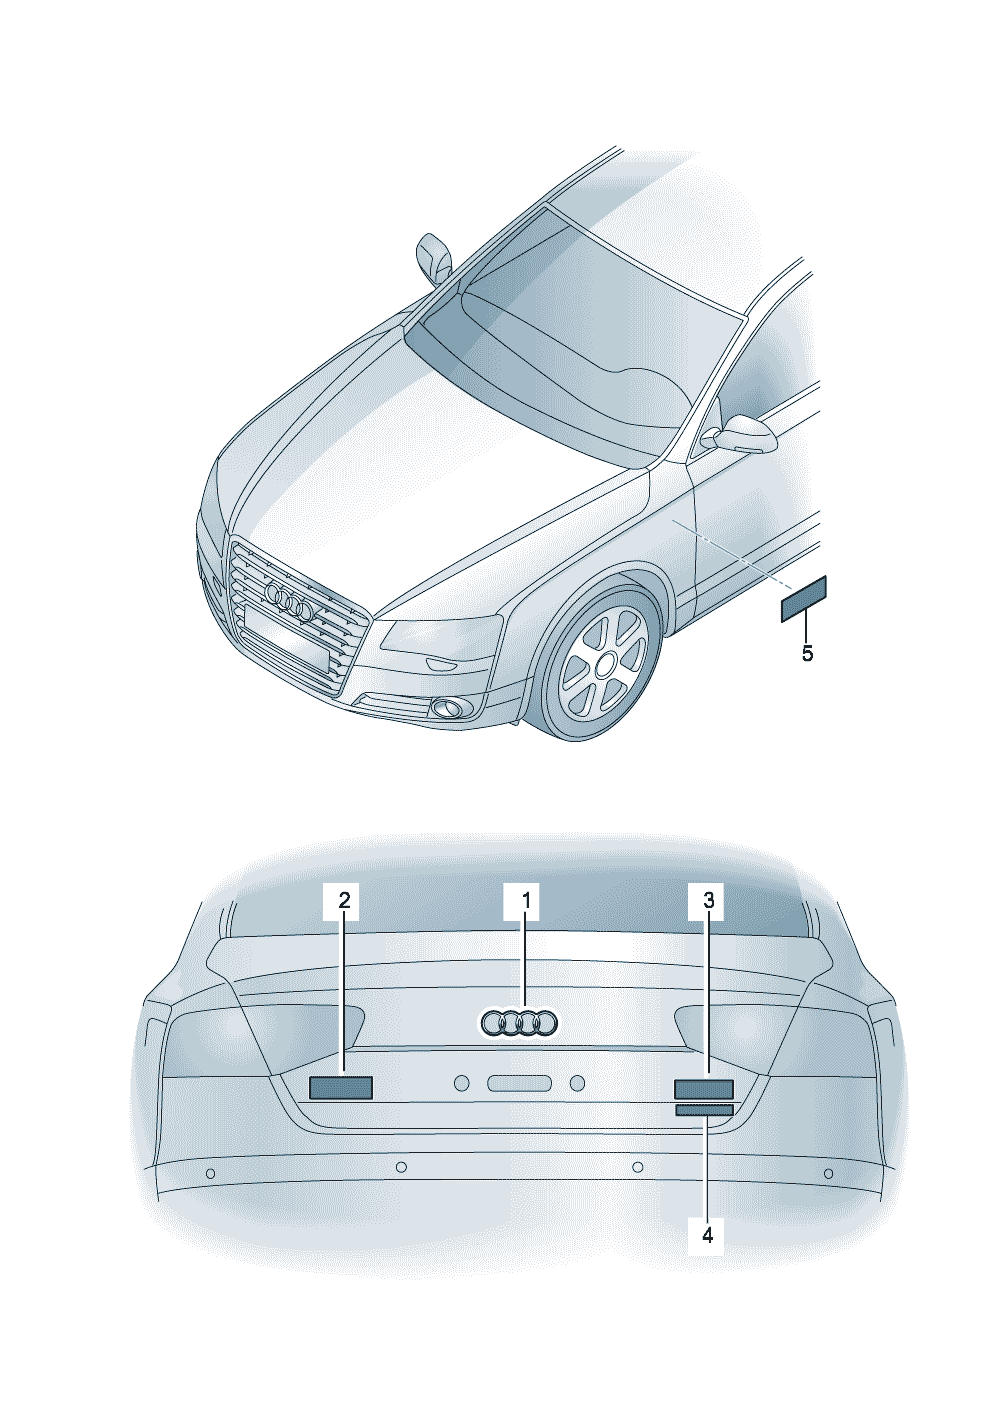 inscriptions/lettering rearside - Audi A6/Avant - a6